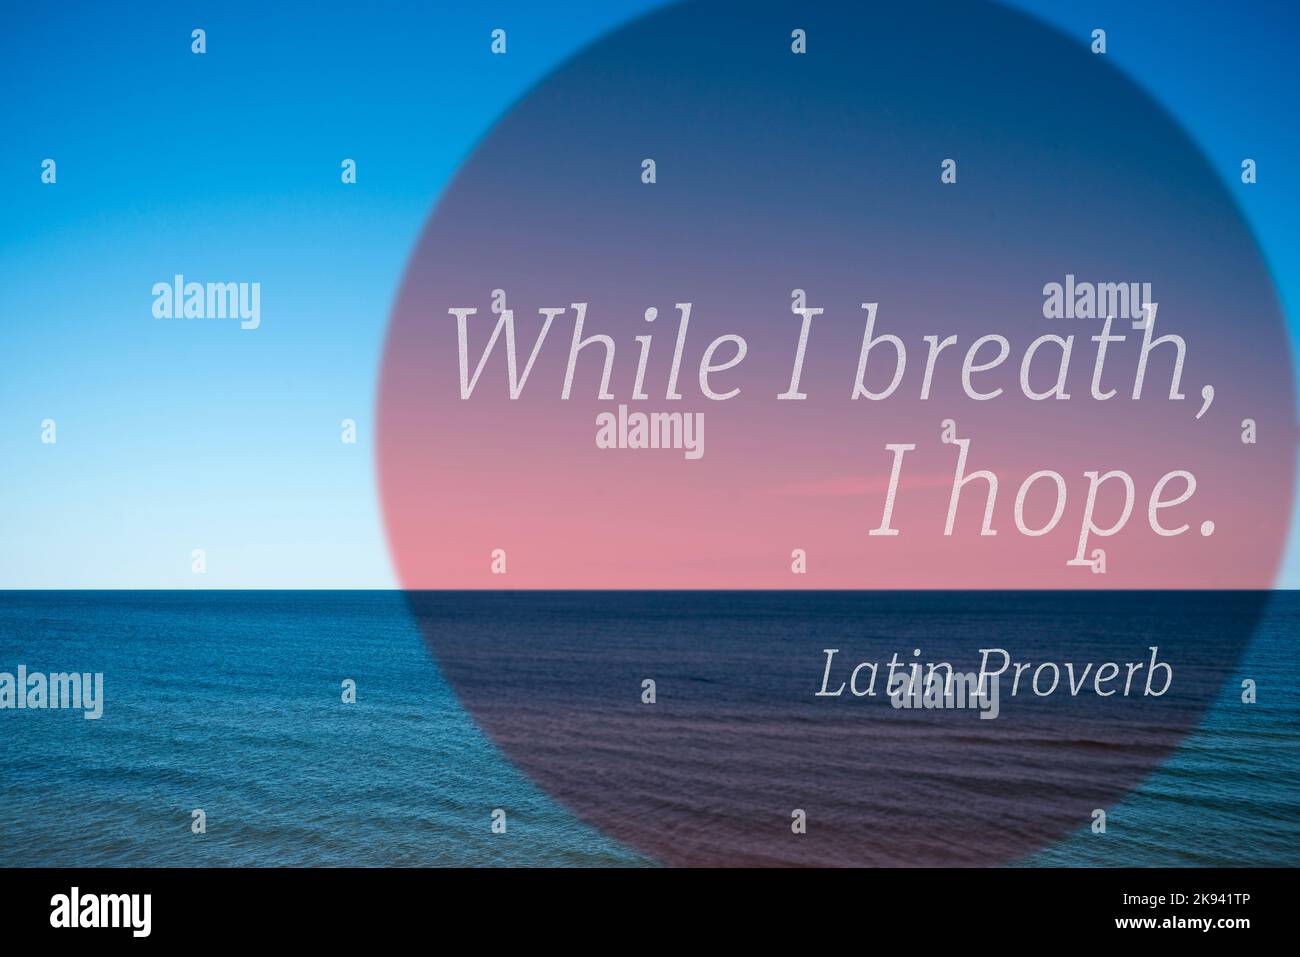 while I breath, I hope - ancient Latin Proverb printed over photo with calm sea landscape Stock Photo